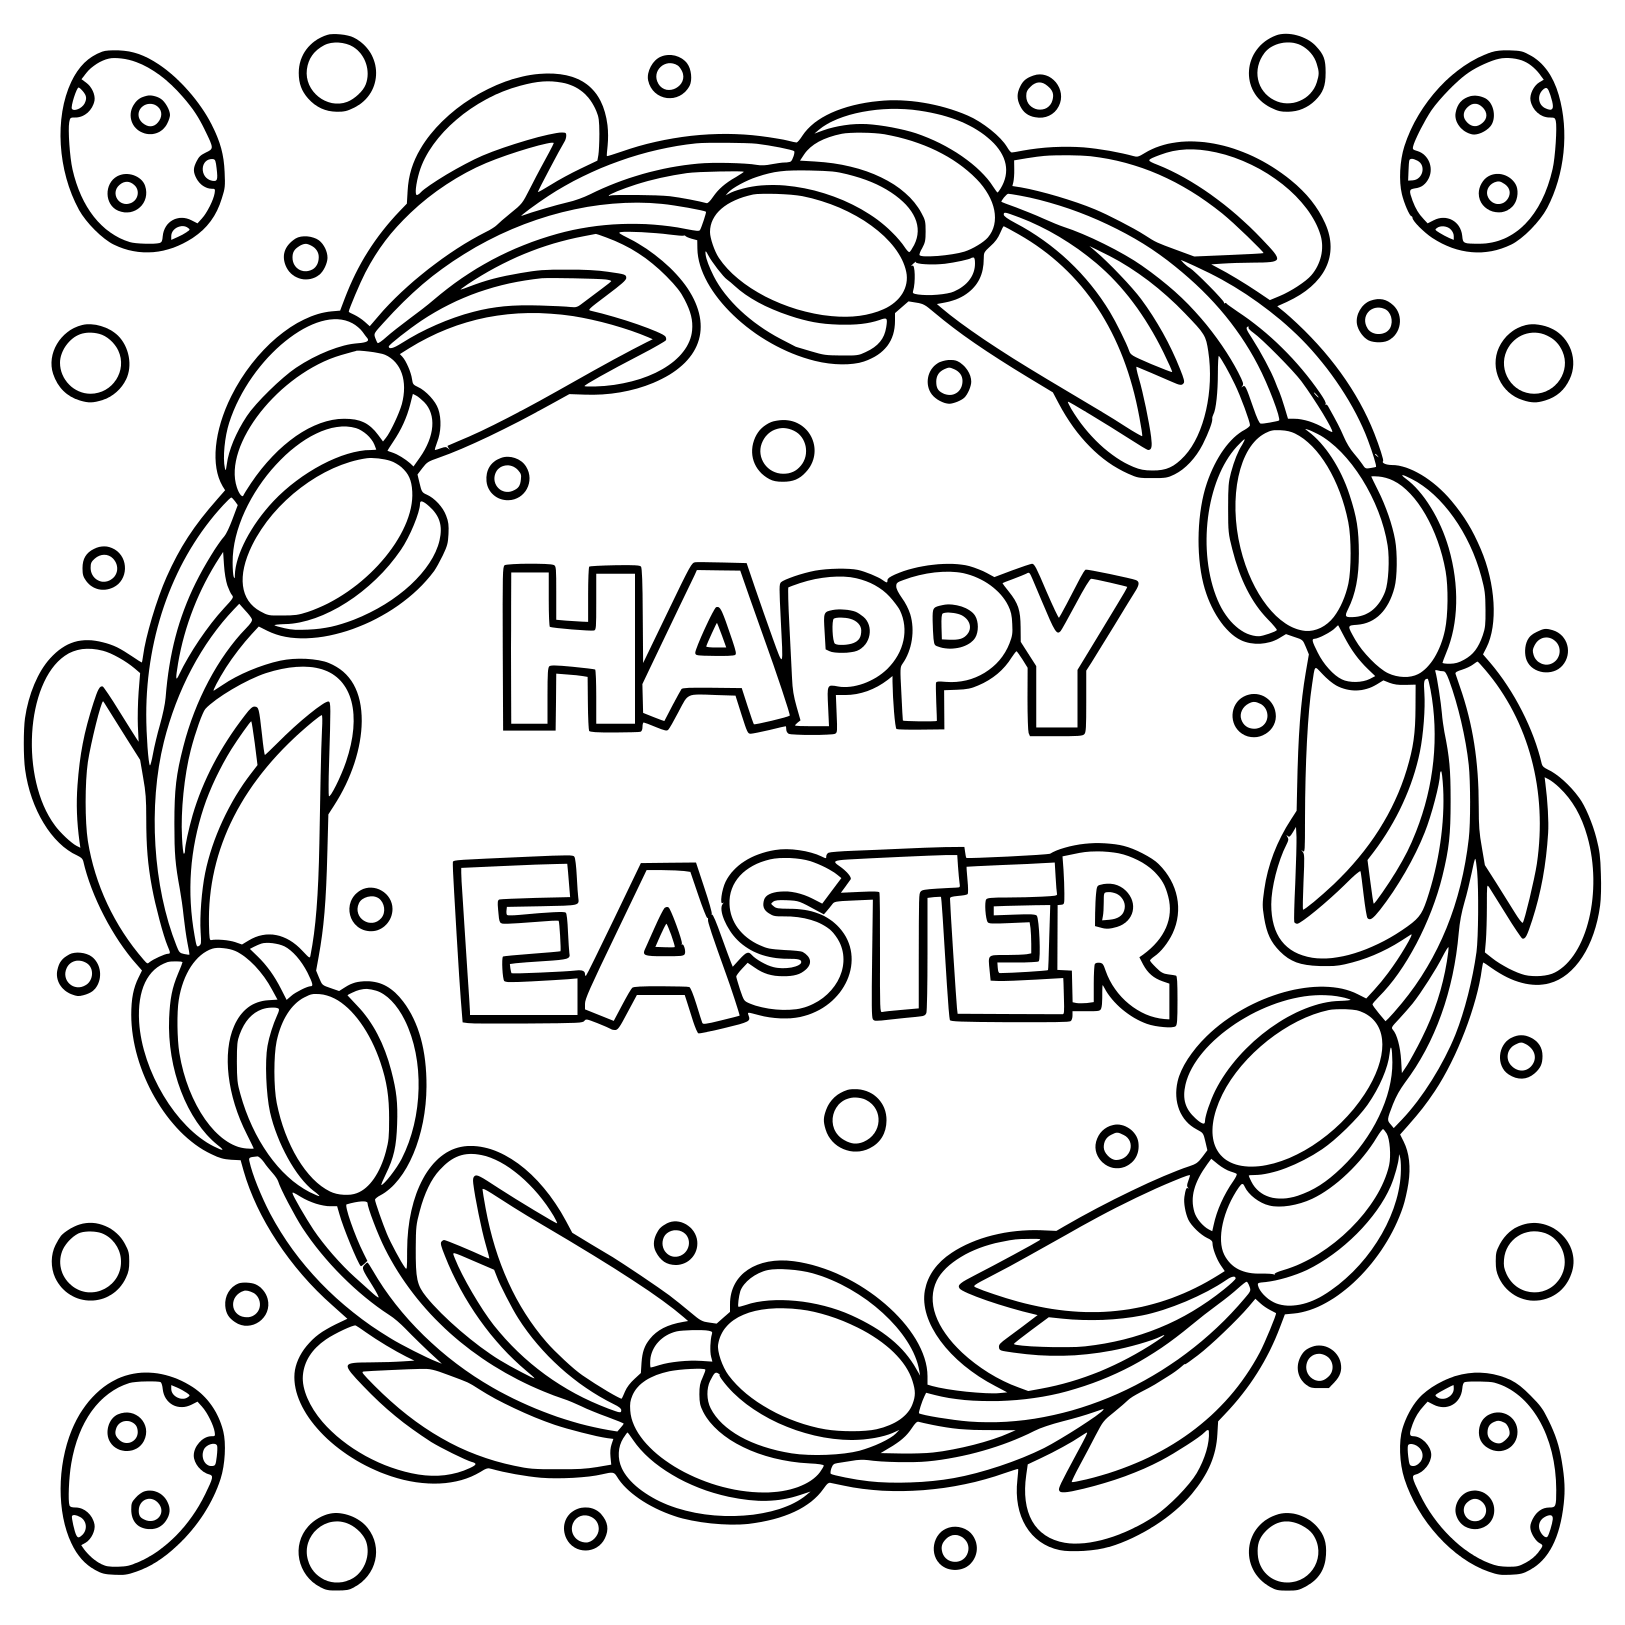 Happy Easter Black And White Illustration